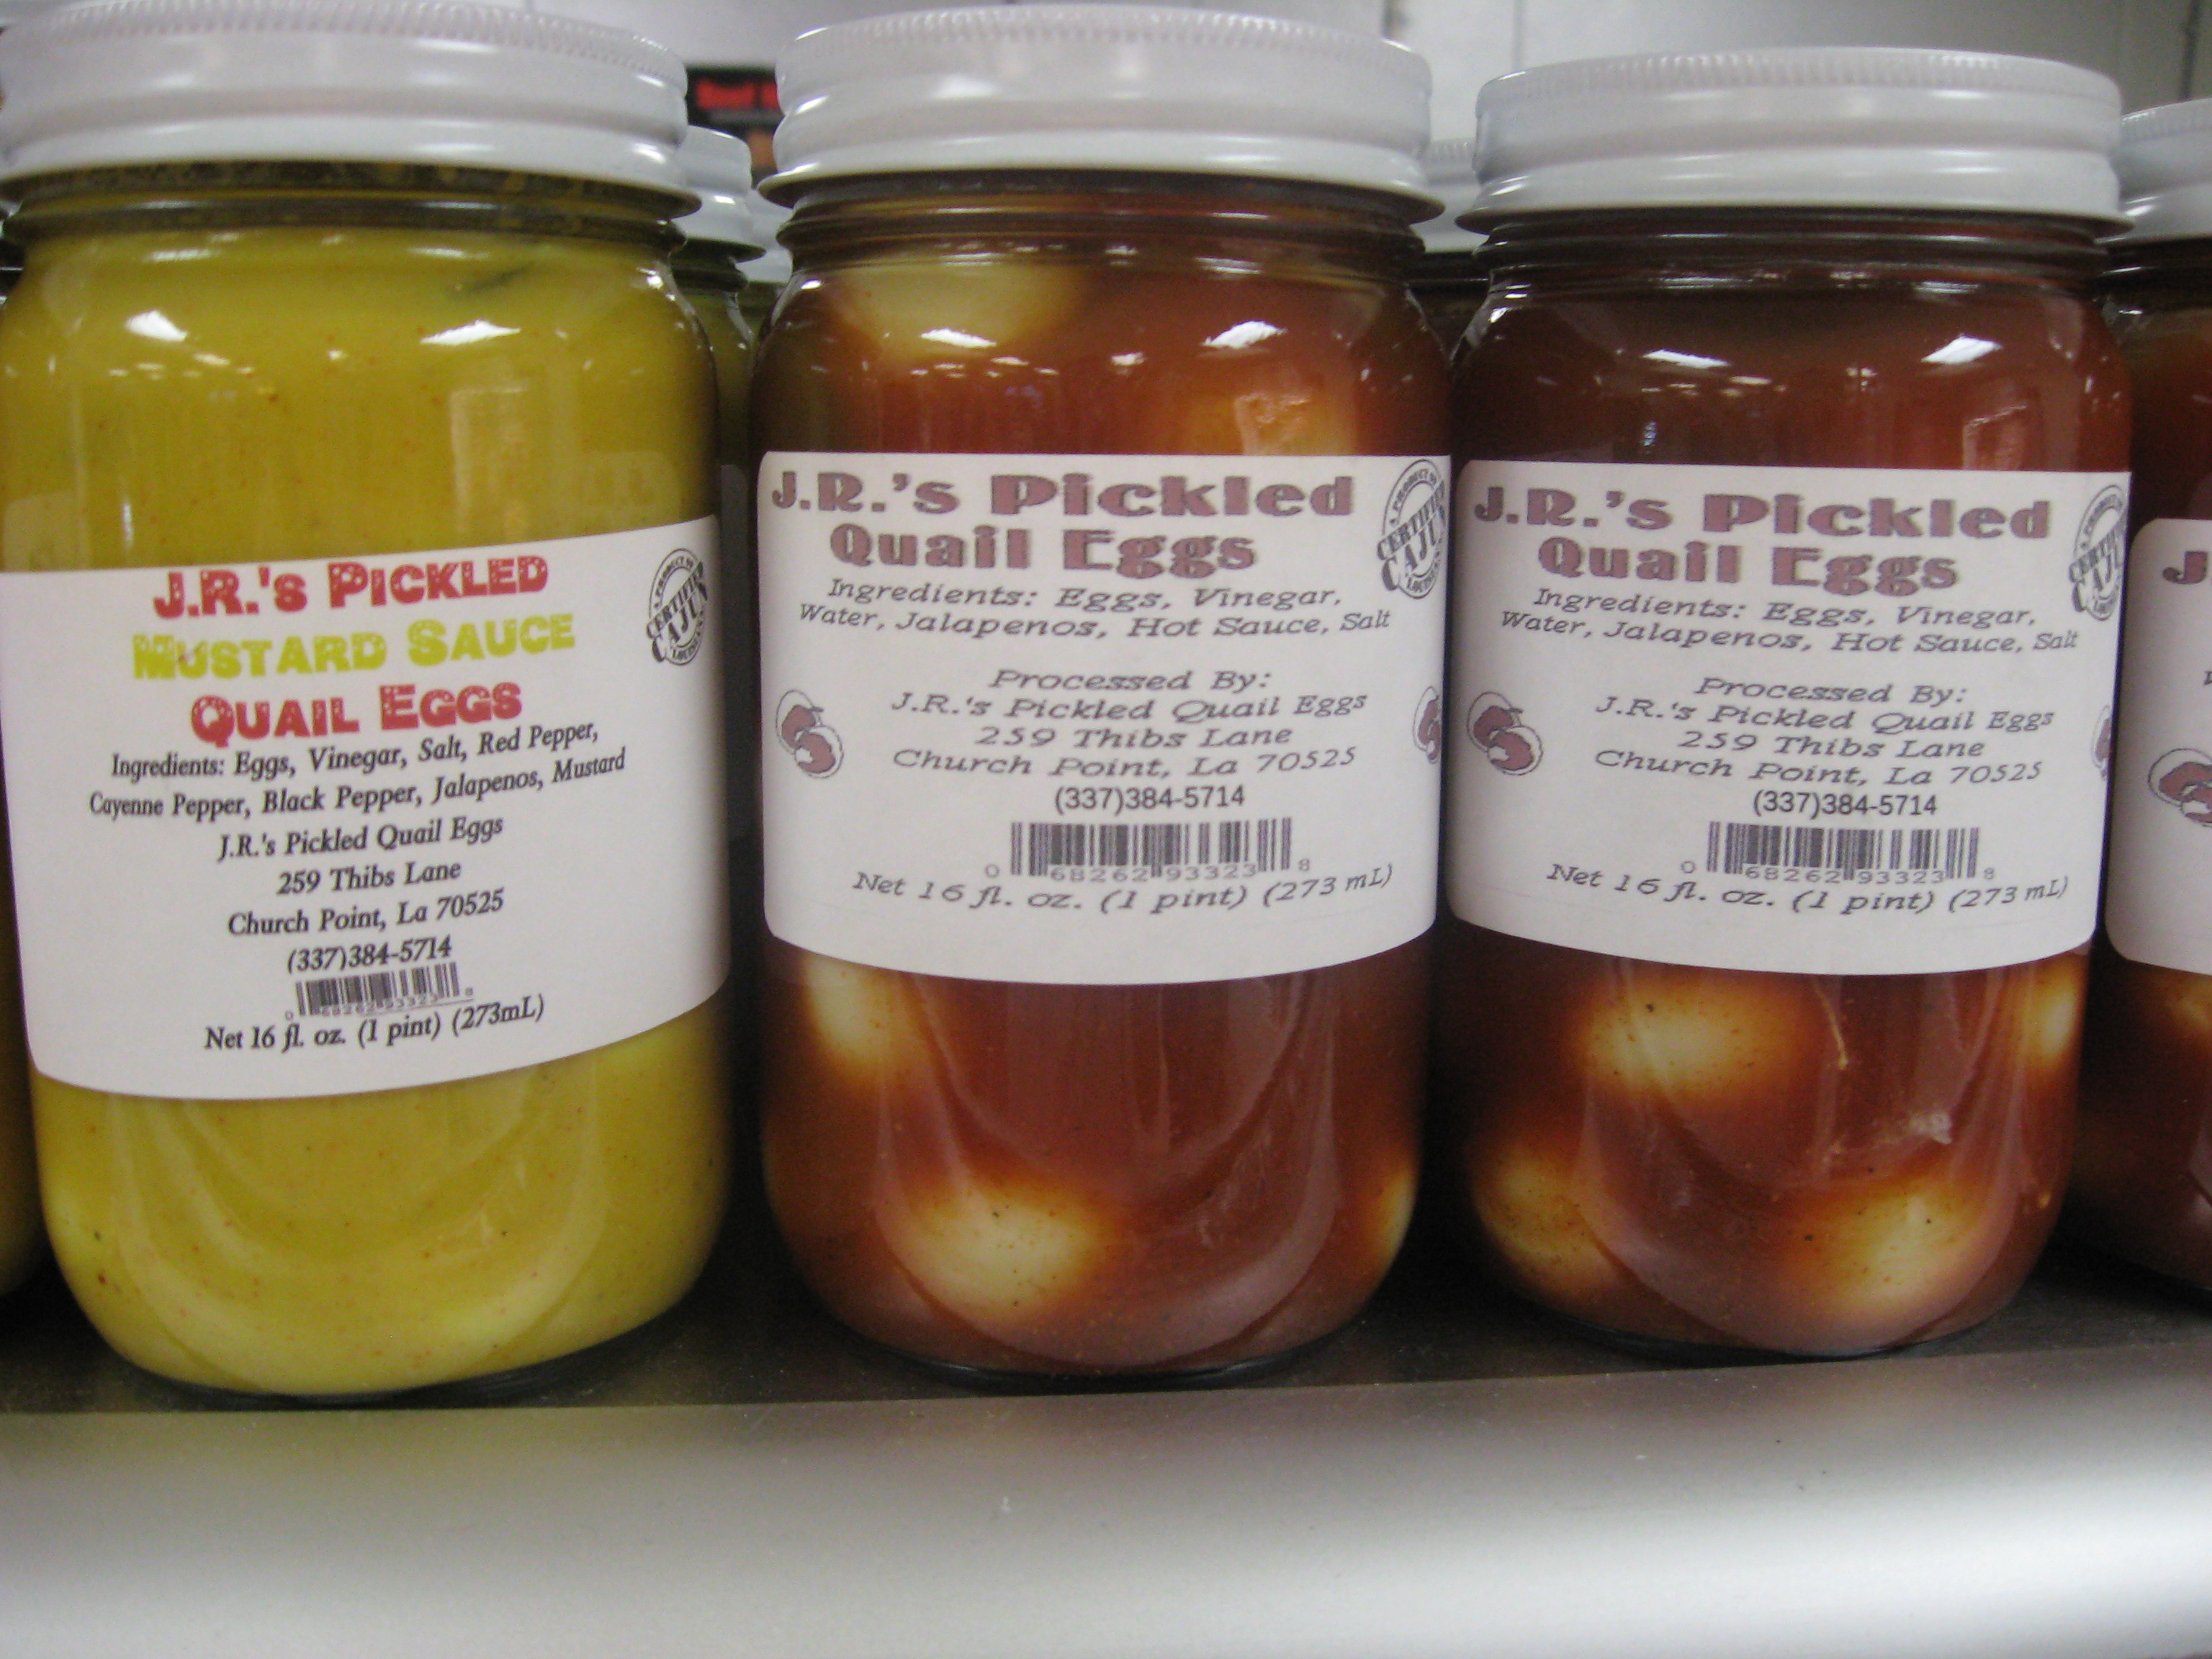 Pickled quail eggs | Flickr - Photo Sharing!